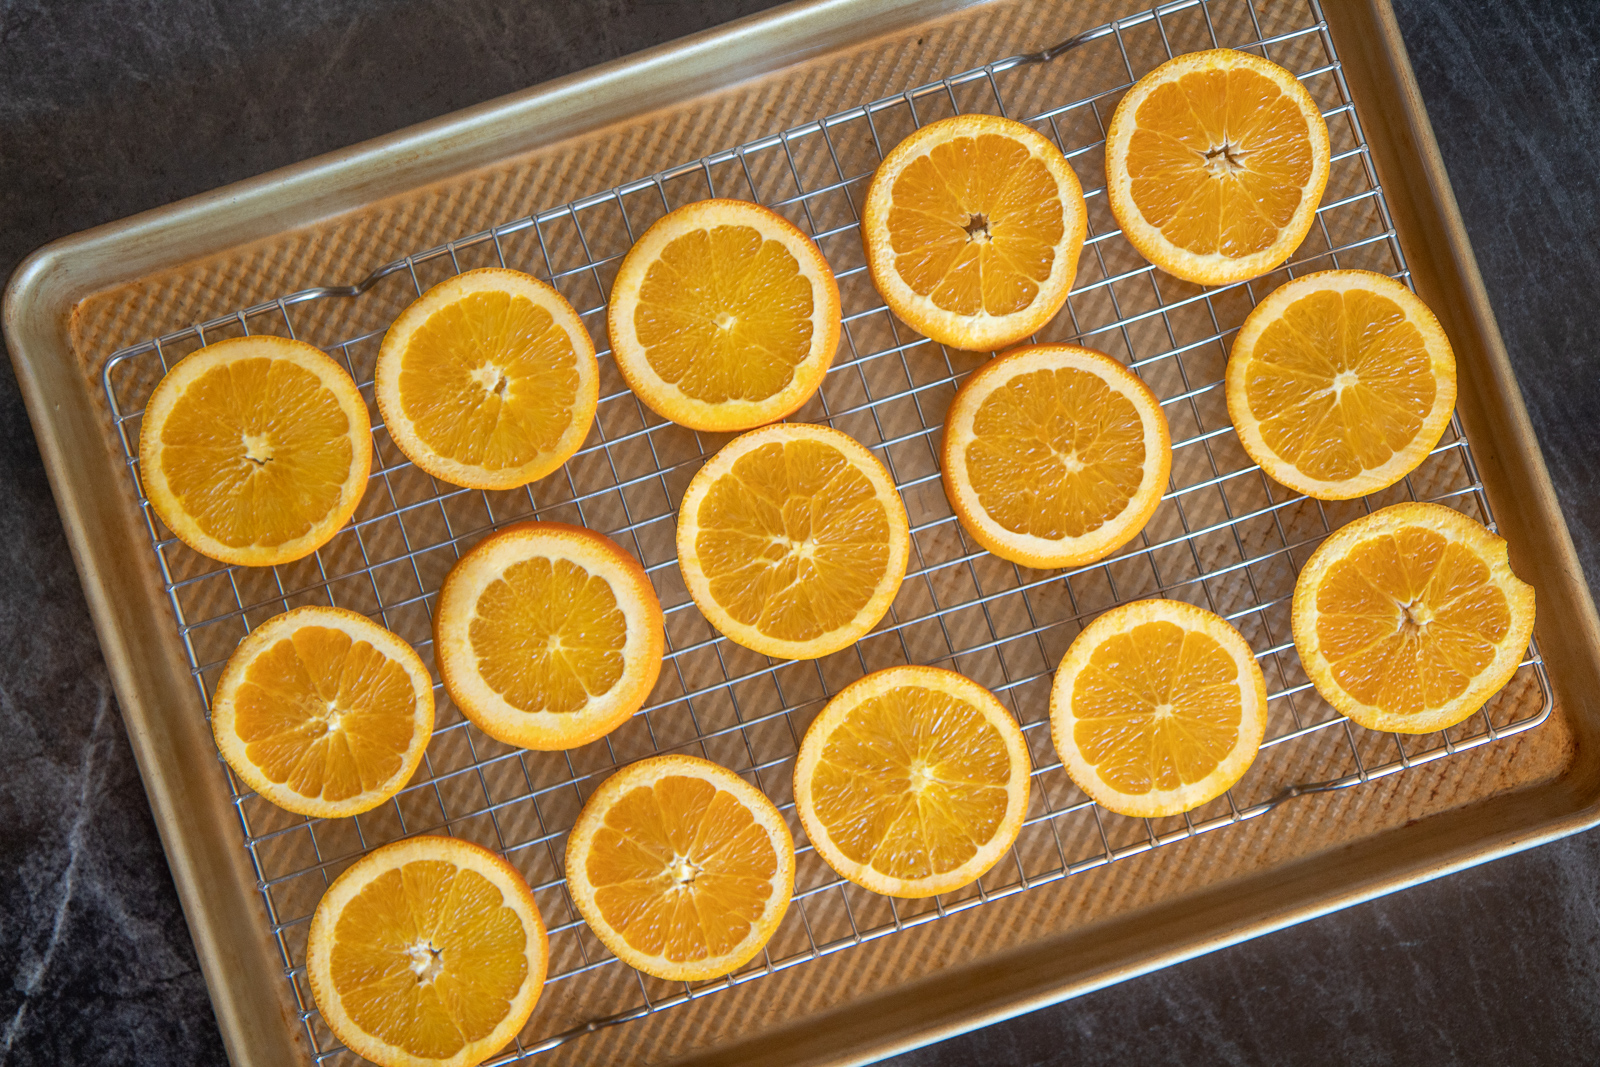 How to dry oranges for potpourri